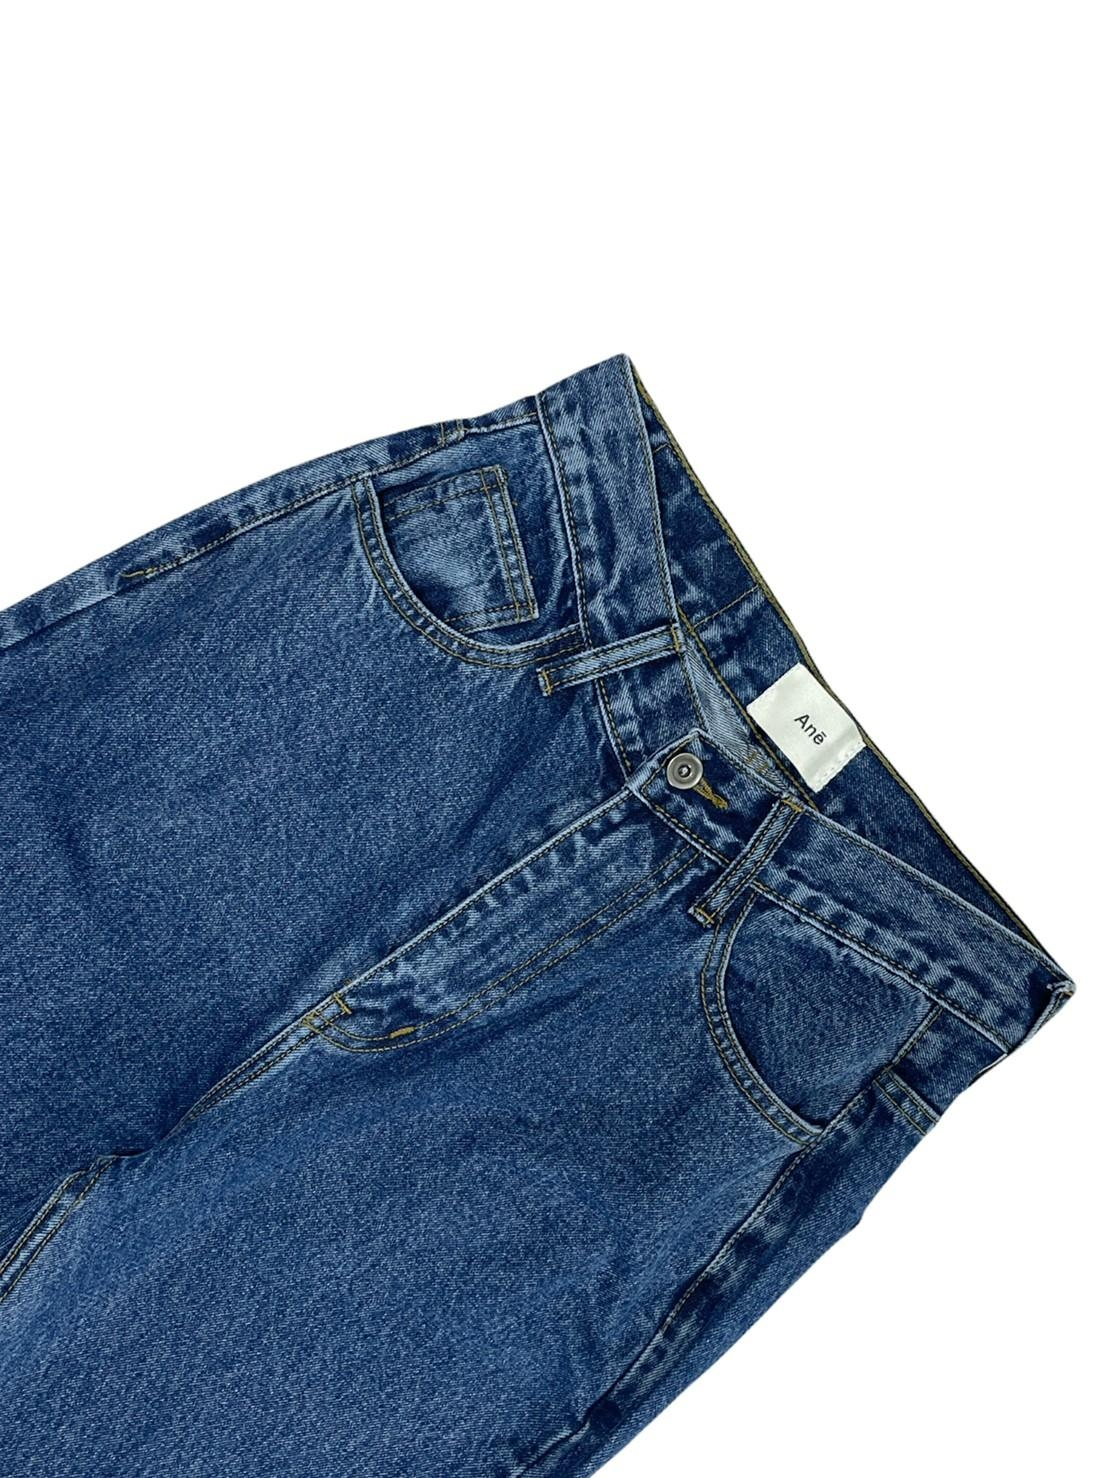 Anē Signtaure Jeans (Medium Blue)